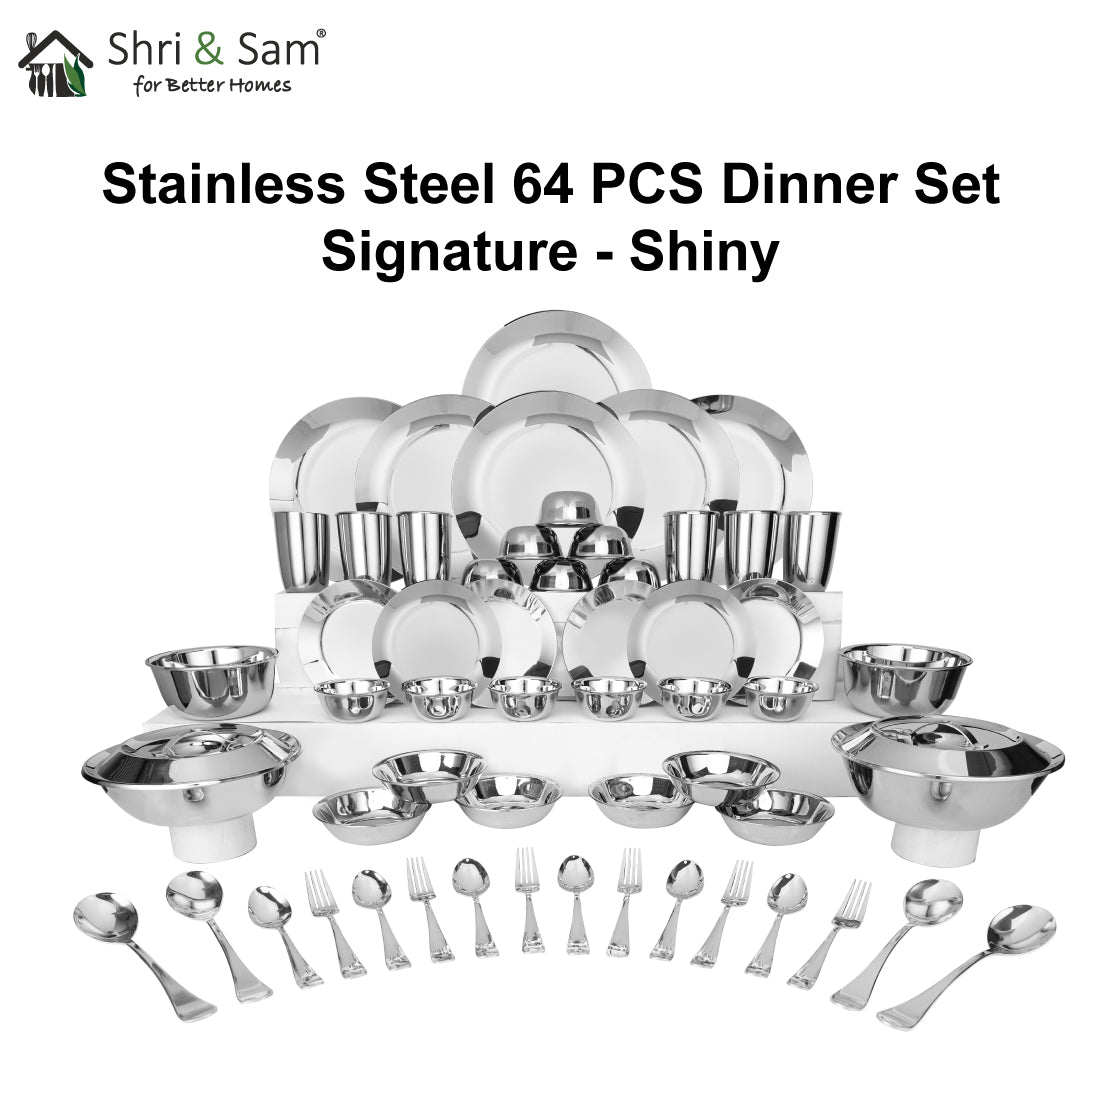 Stainless Steel 64 PCS Dinner Set (6 People) Signature - Shiny